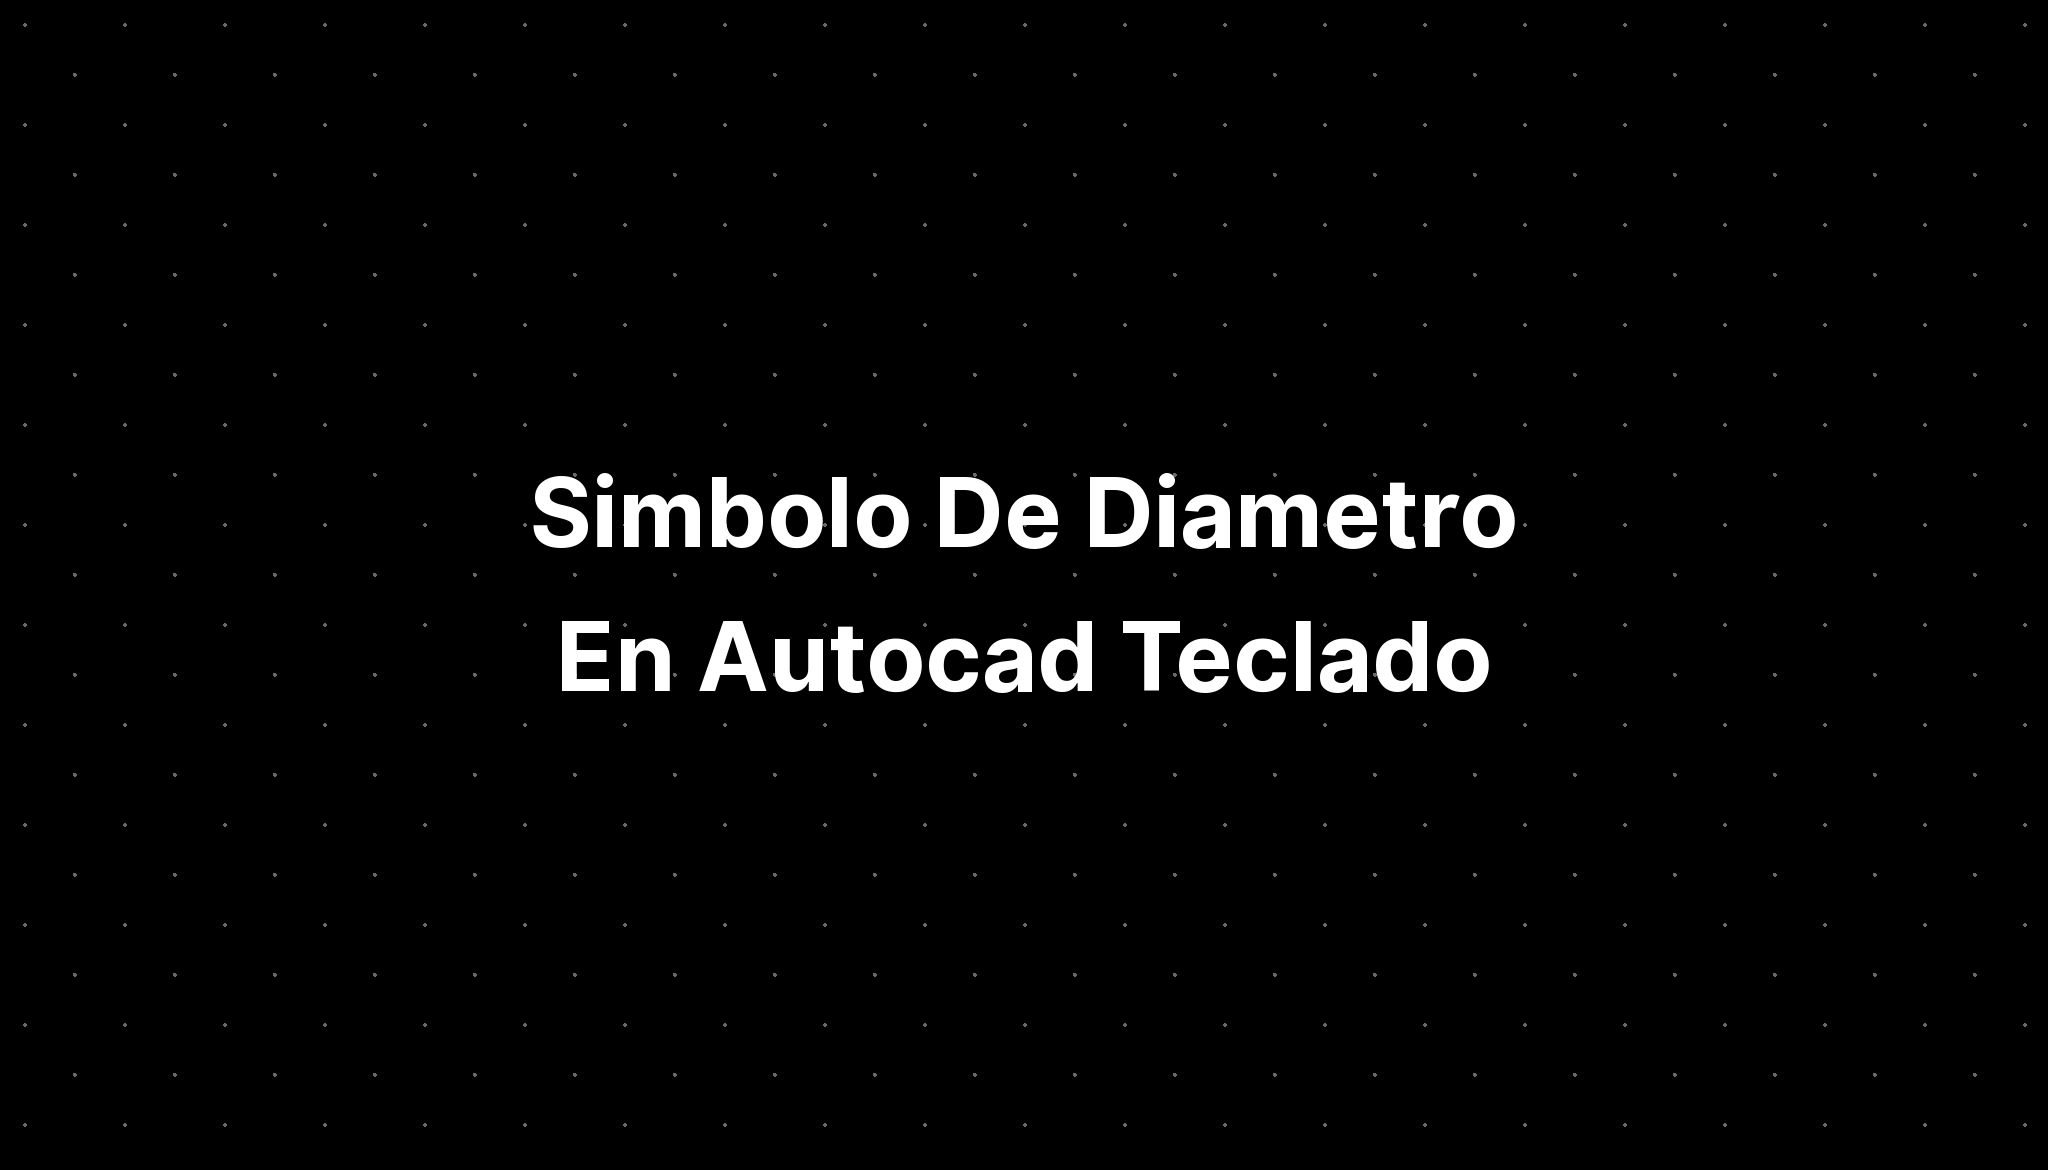 Simbolo De Diametro En Autocad Teclado - IMAGESEE